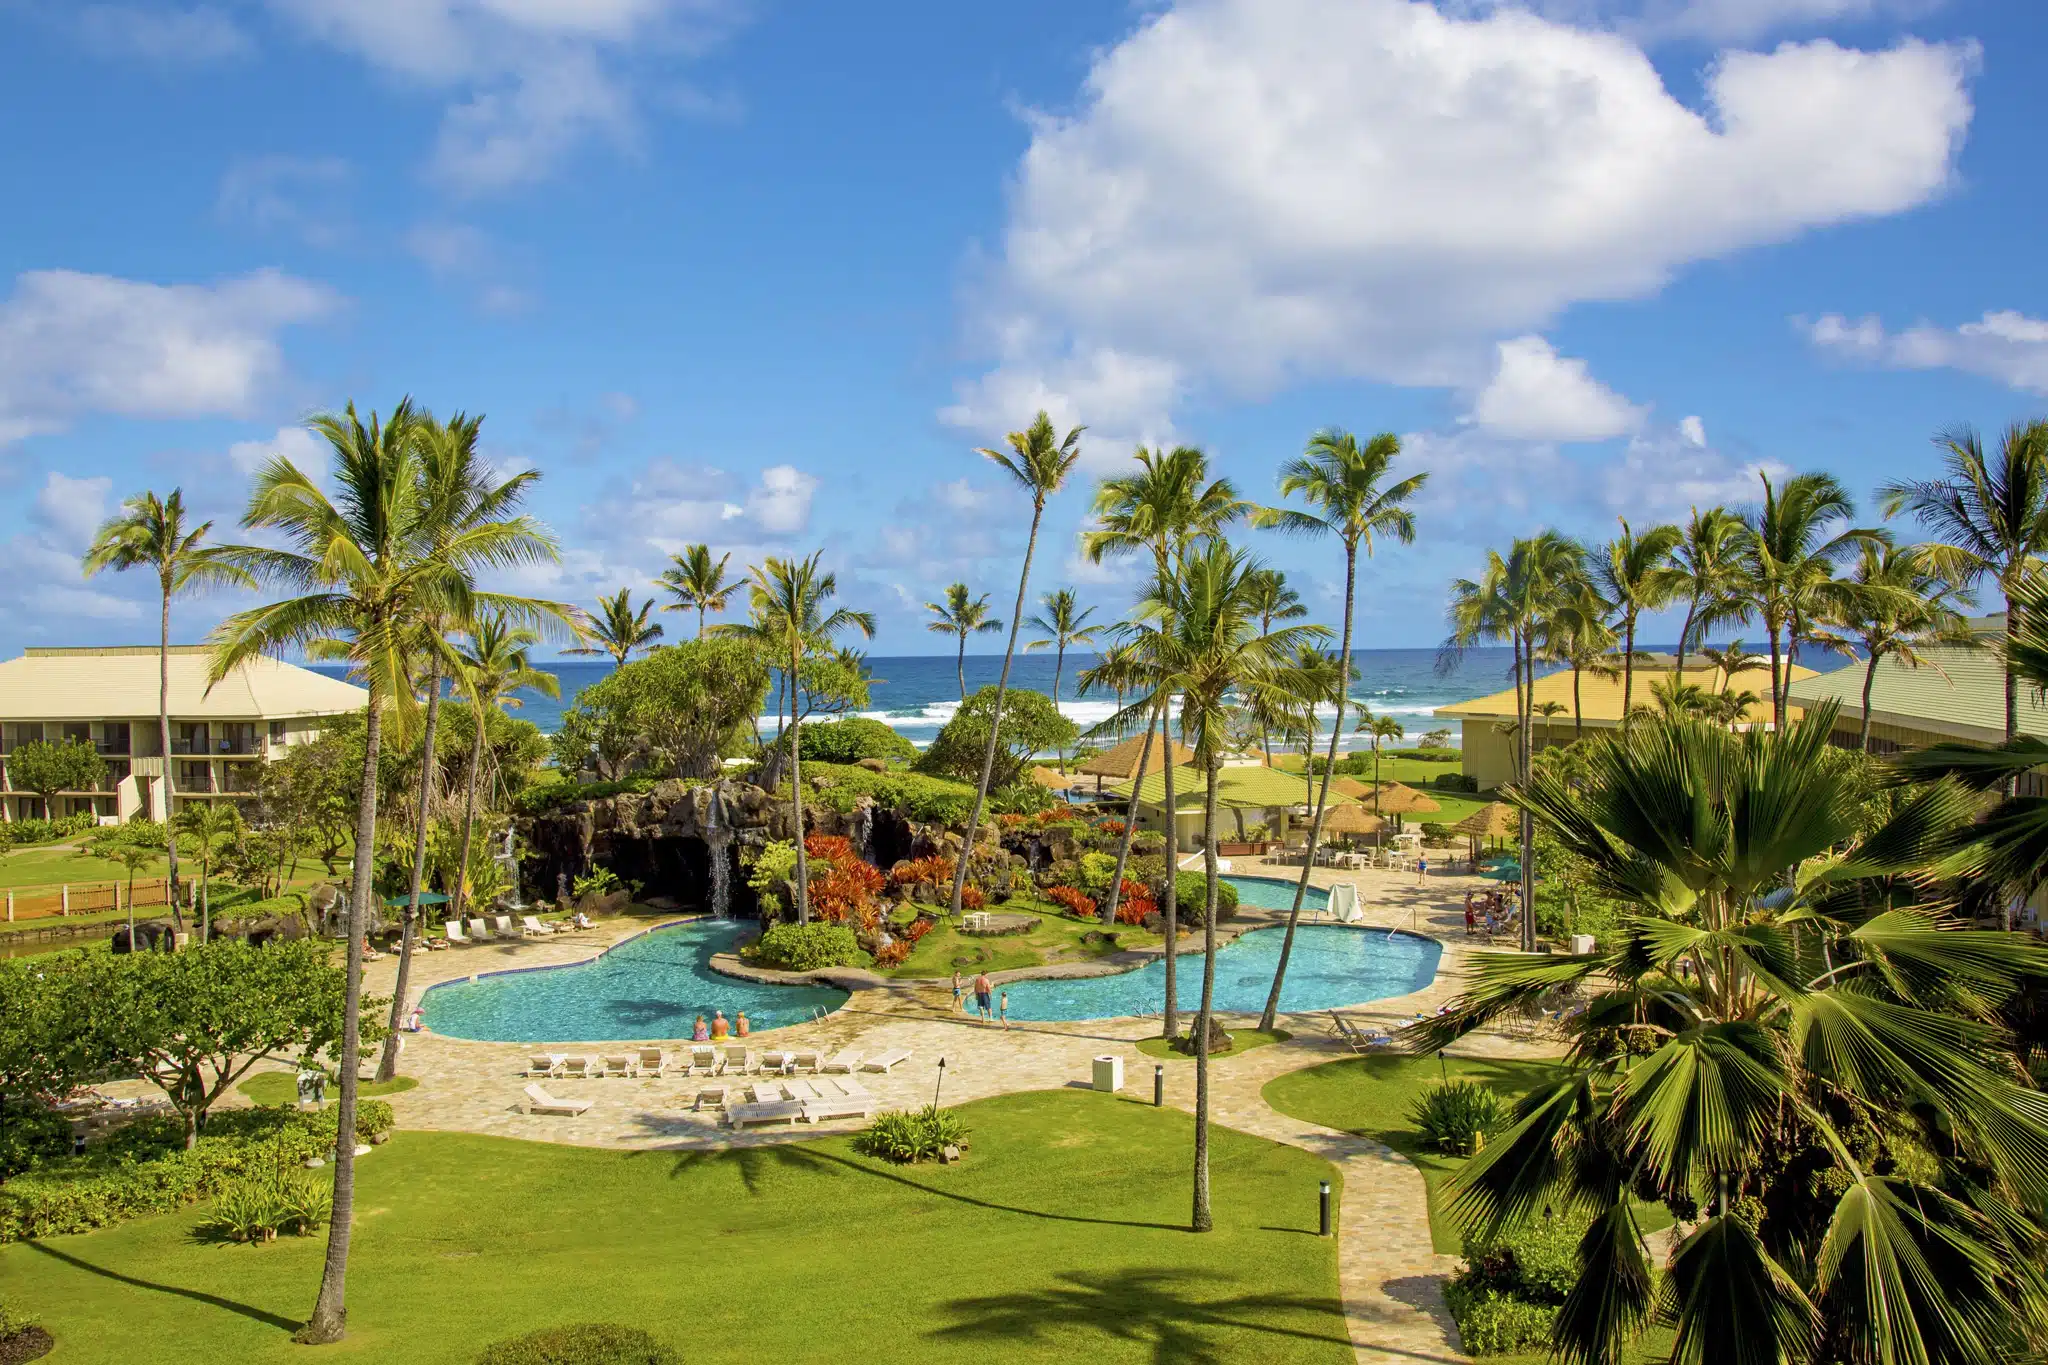 Kauai Beach Resort & Spa is a Hotel located in the city of Lihue on Kauai, Hawaii